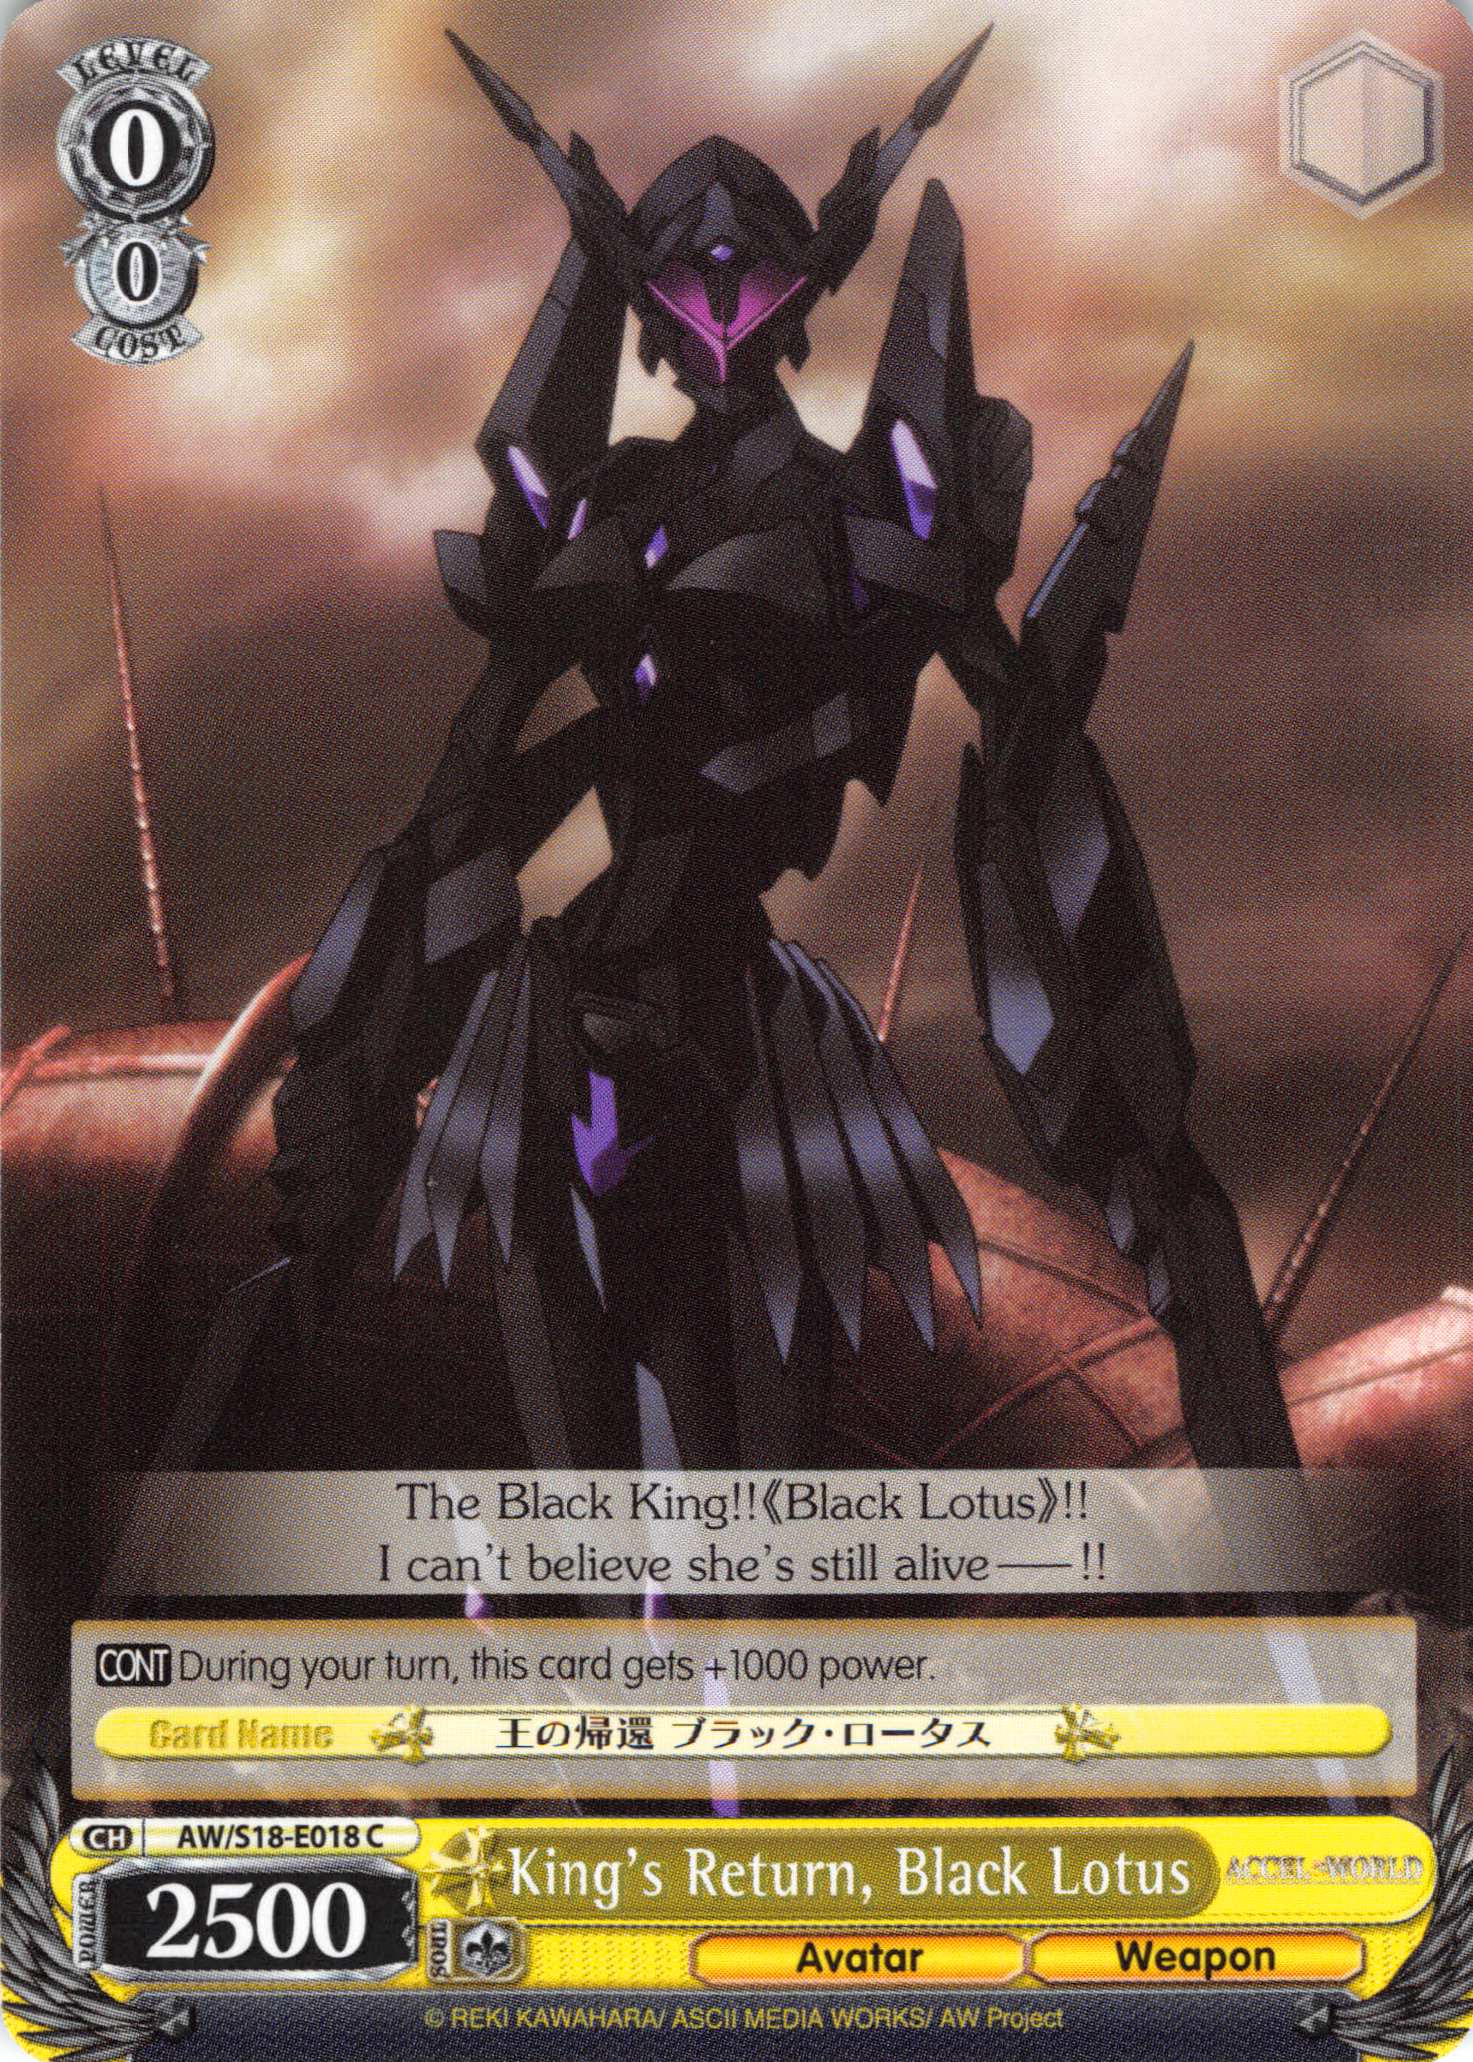 King's Return, Black Lotus (AW/S18-E018 C) [Accel World]